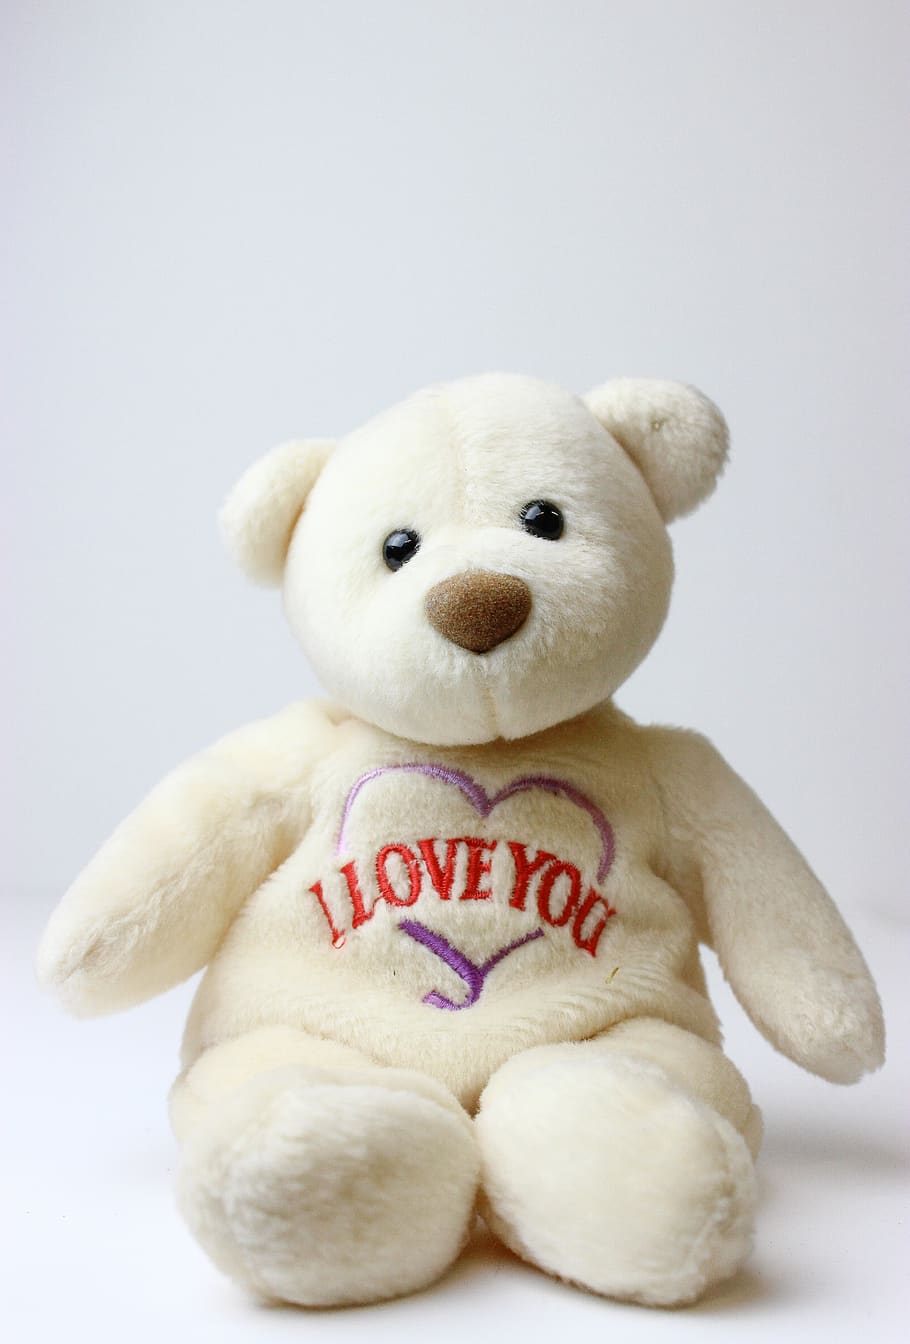 teddy bear, beanie baby, bear, i love you, teddy, beanie, adorable, white, cute, plush toy